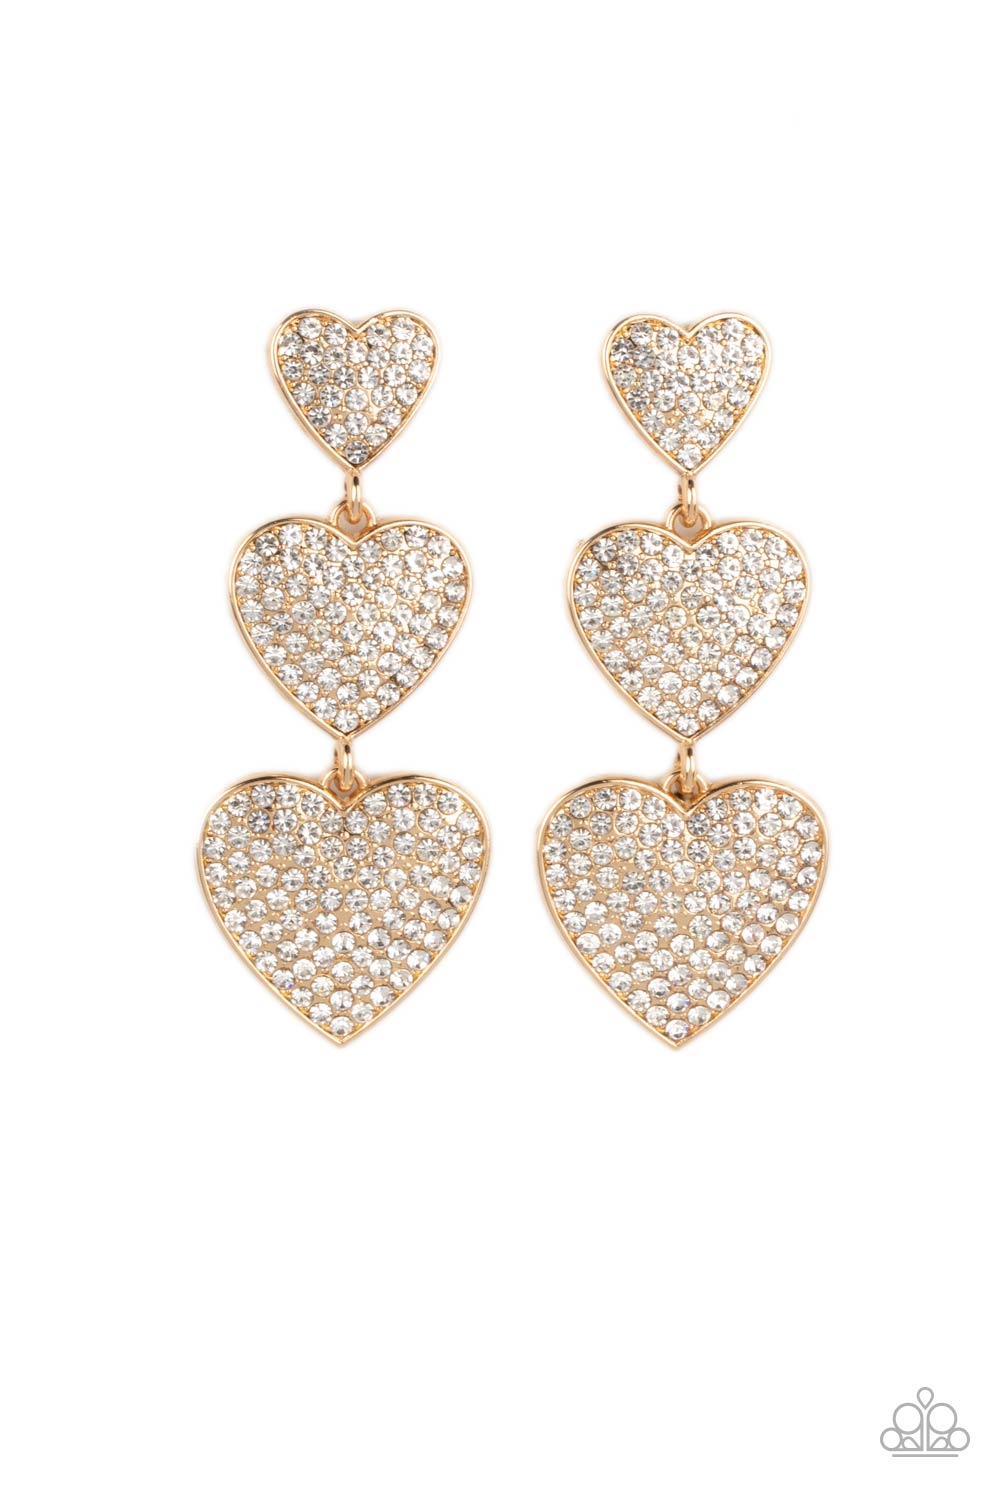 Couples Retreat - Gold Heart & White Rhinestone Heart Paparazzi Earrings